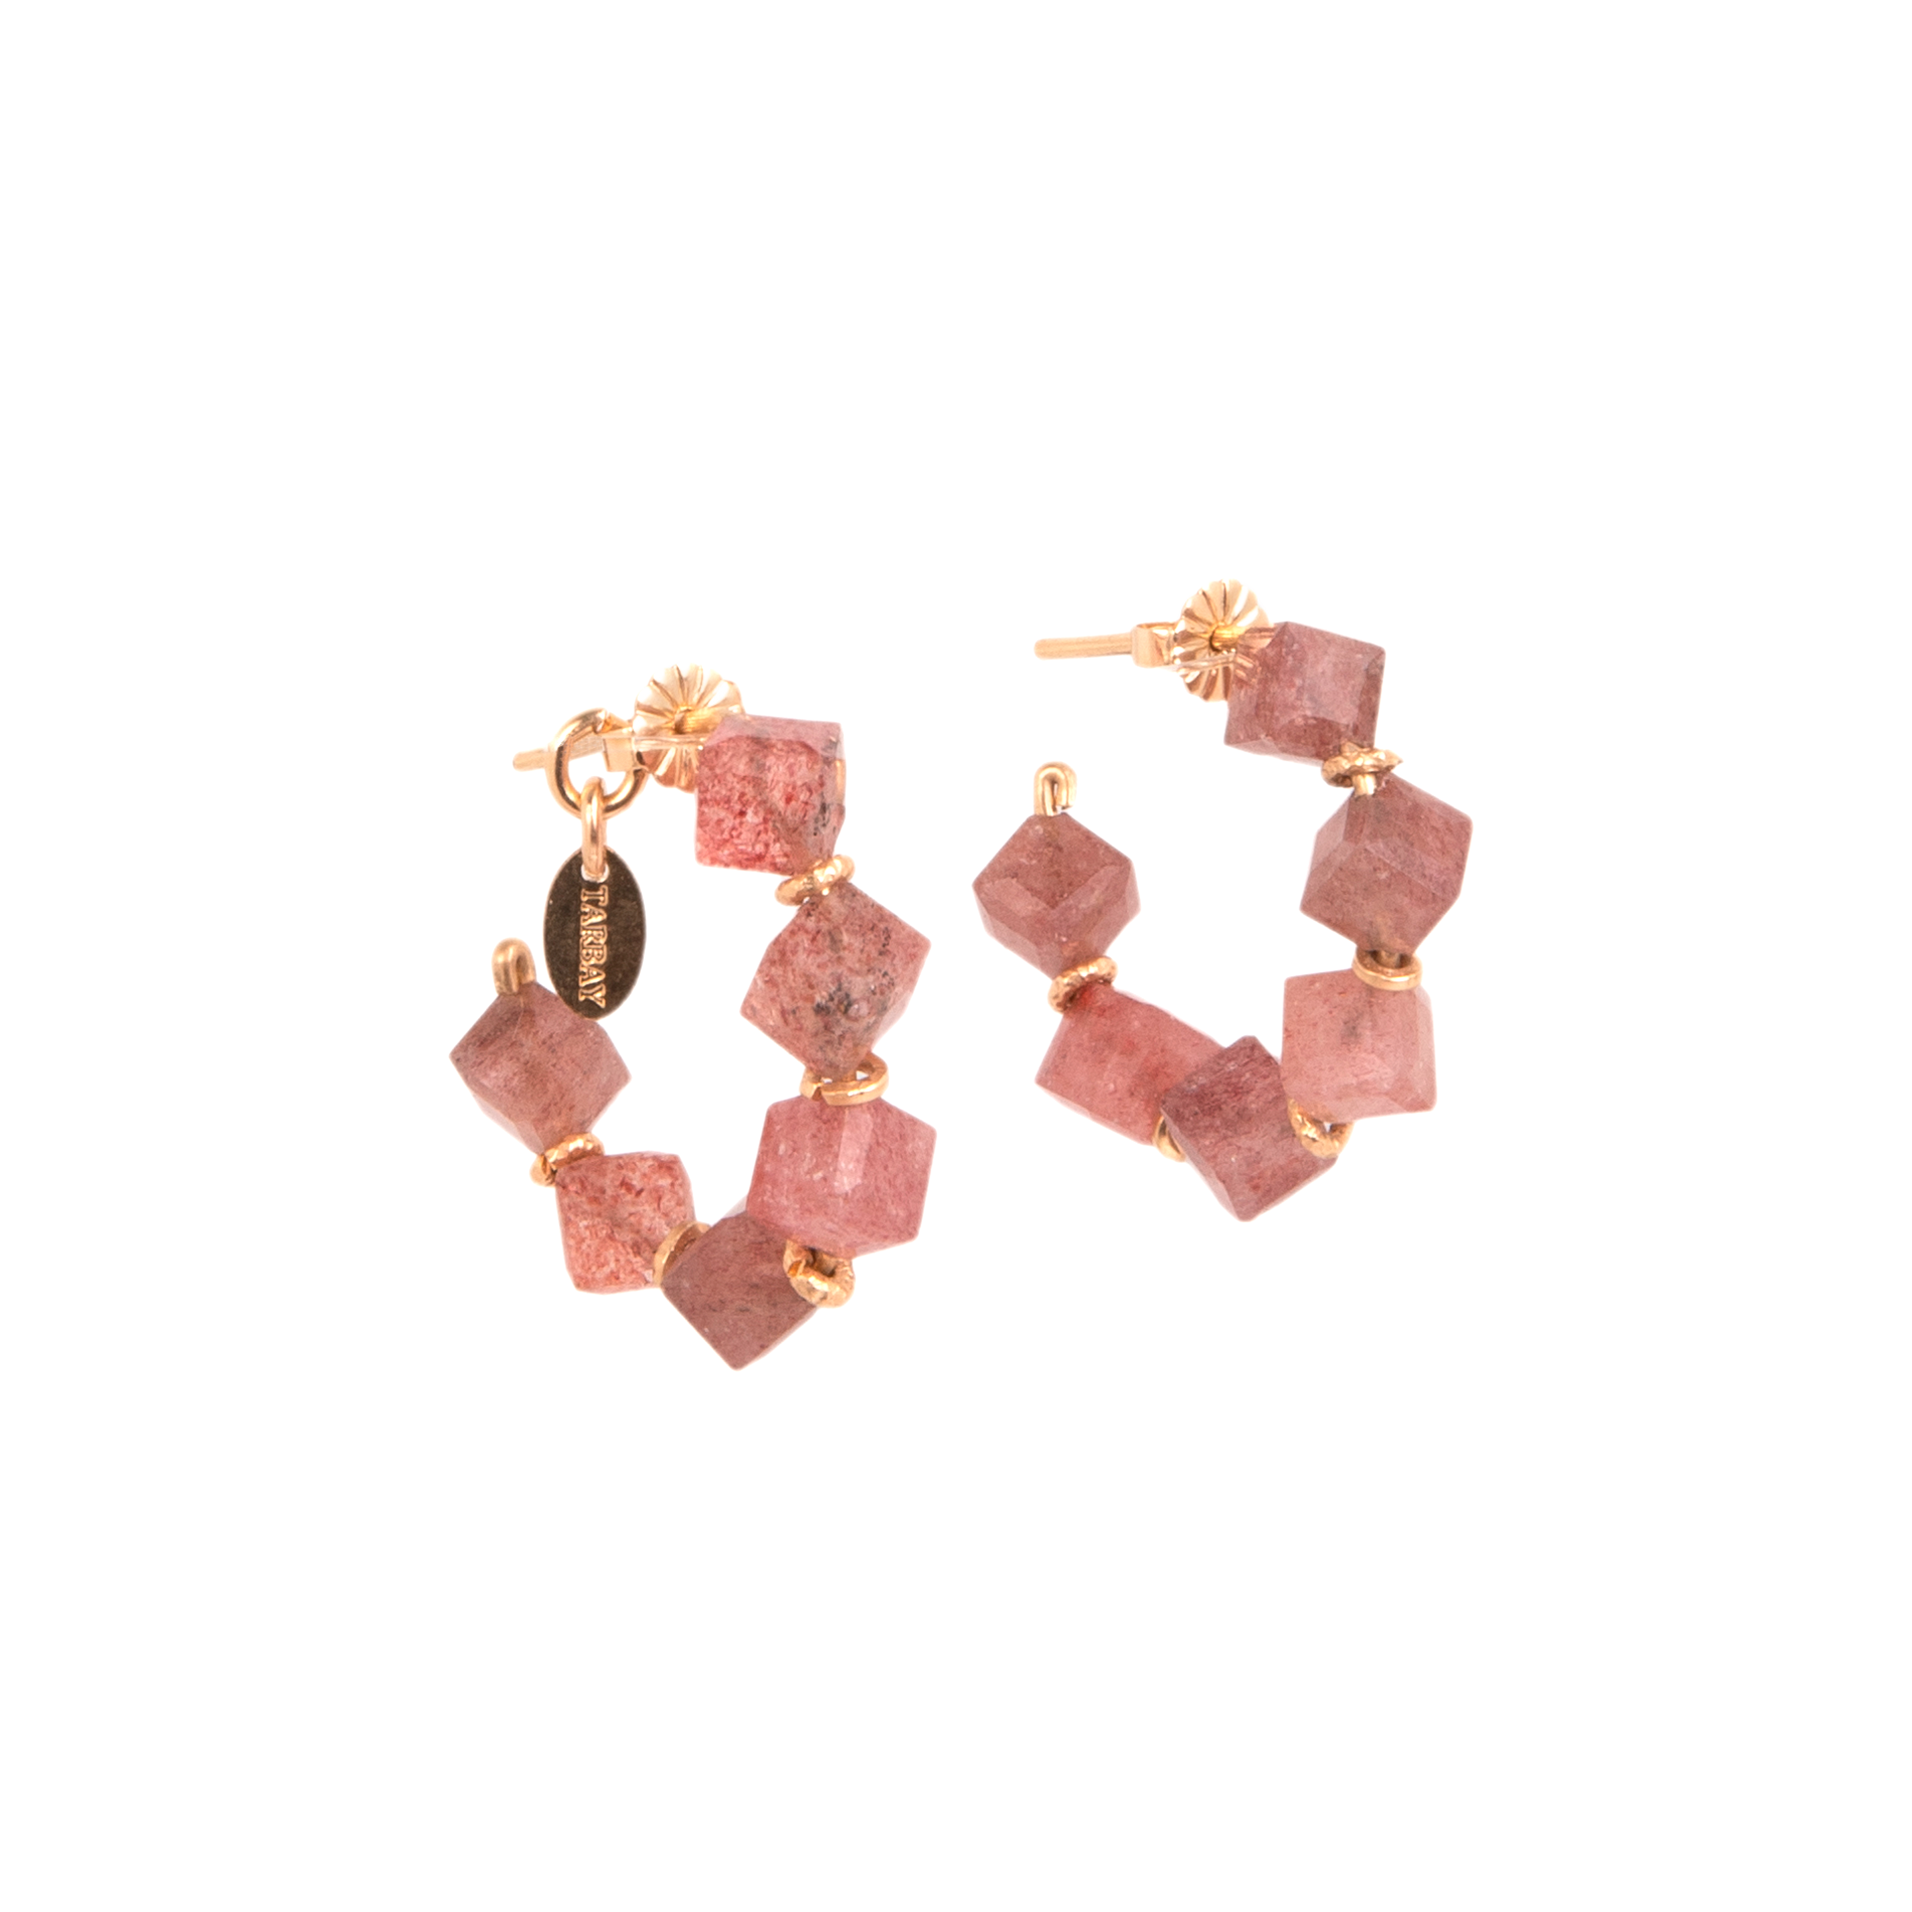 Acerola Hoop Earrings #1 (25mm) - Cuarzo Cherry Earrings TARBAY   